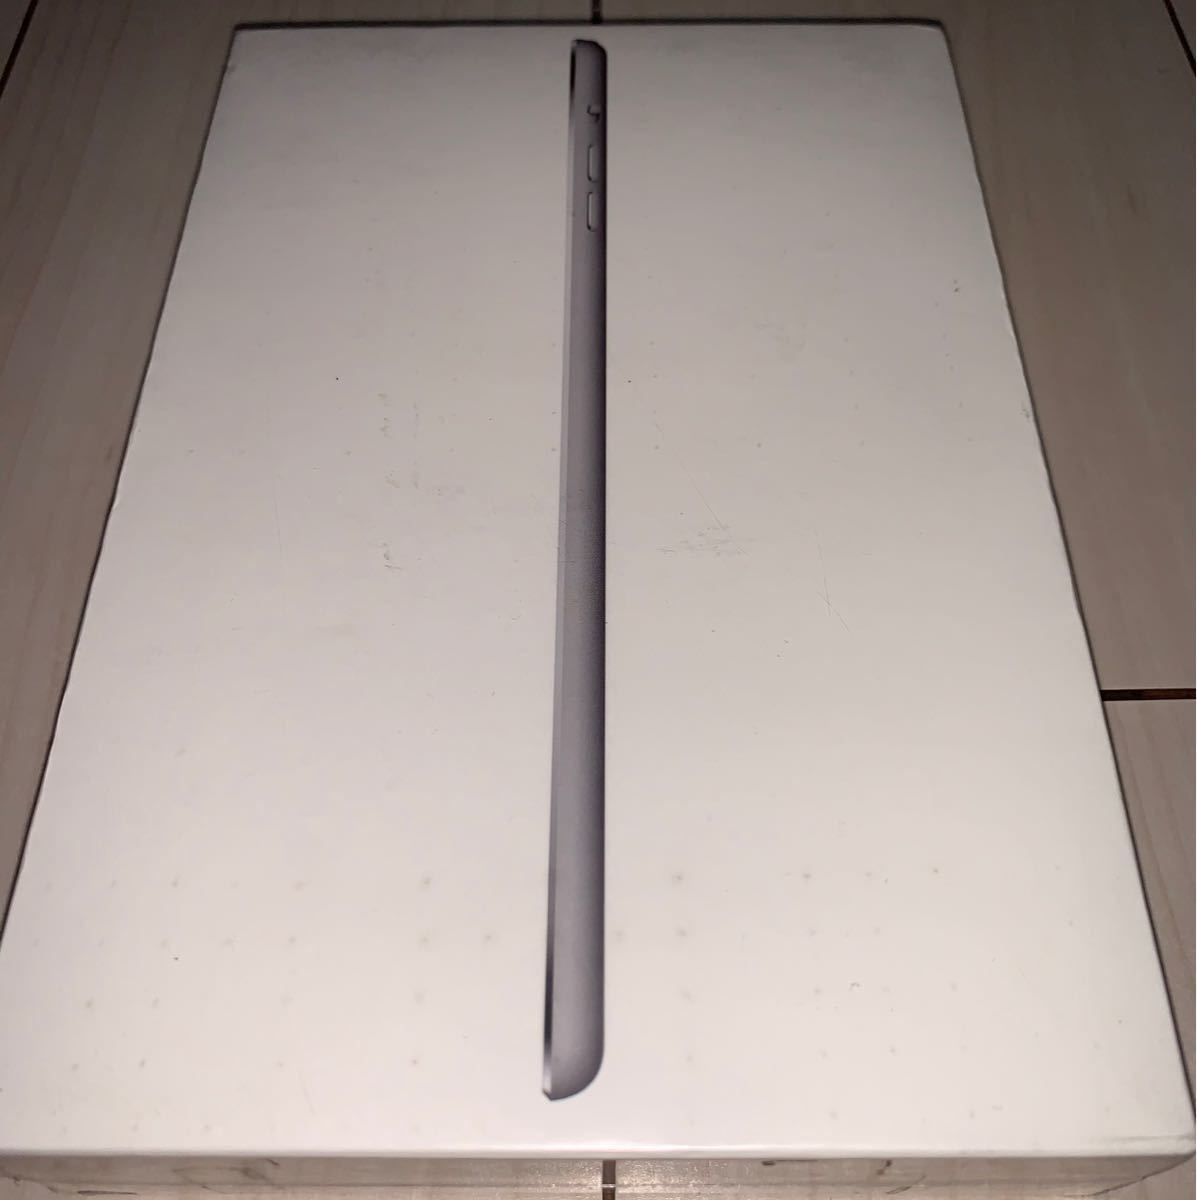 iPad mini3 Wi-Fi 16GB SG スペースグレー mgnr2j/a 新品未使用 レア 珍品